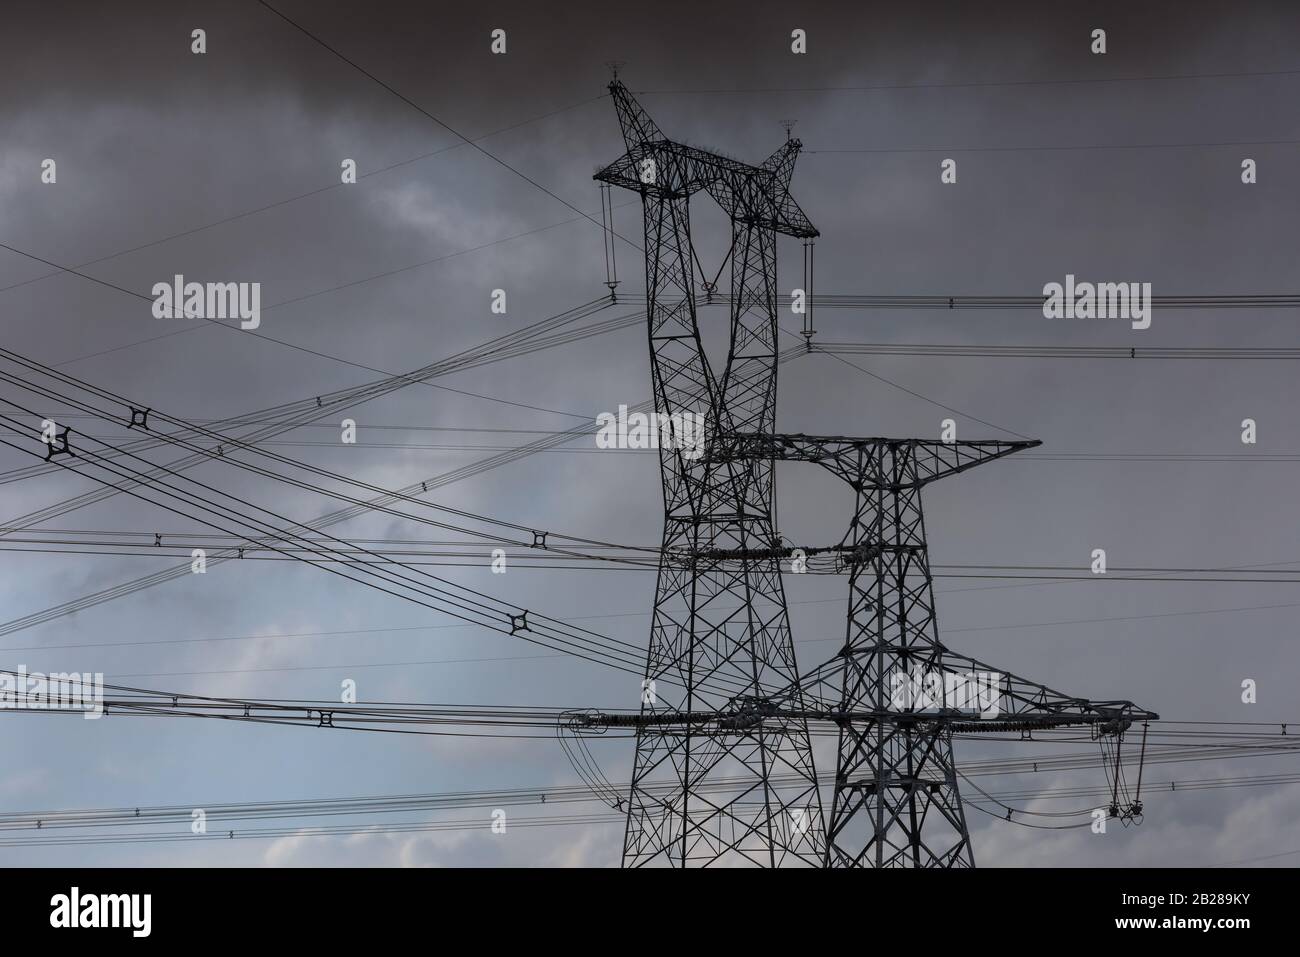 High voltage pylons on dry grassland Stock Photo